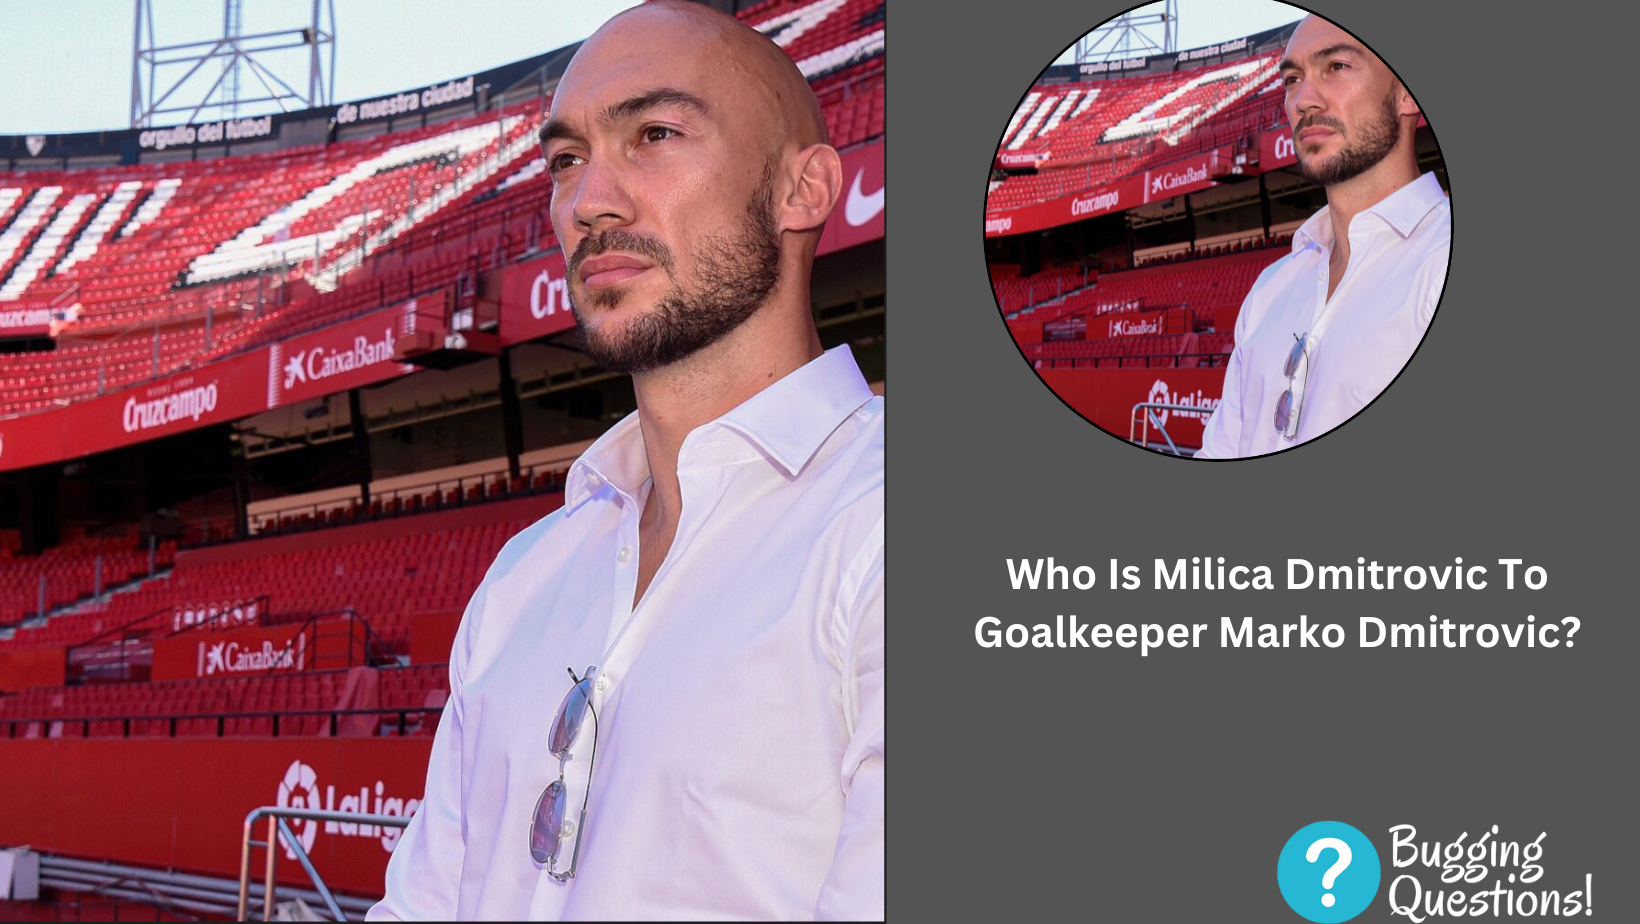 Who Is Milica Dmitrovic To Goalkeeper Marko Dmitrovic?